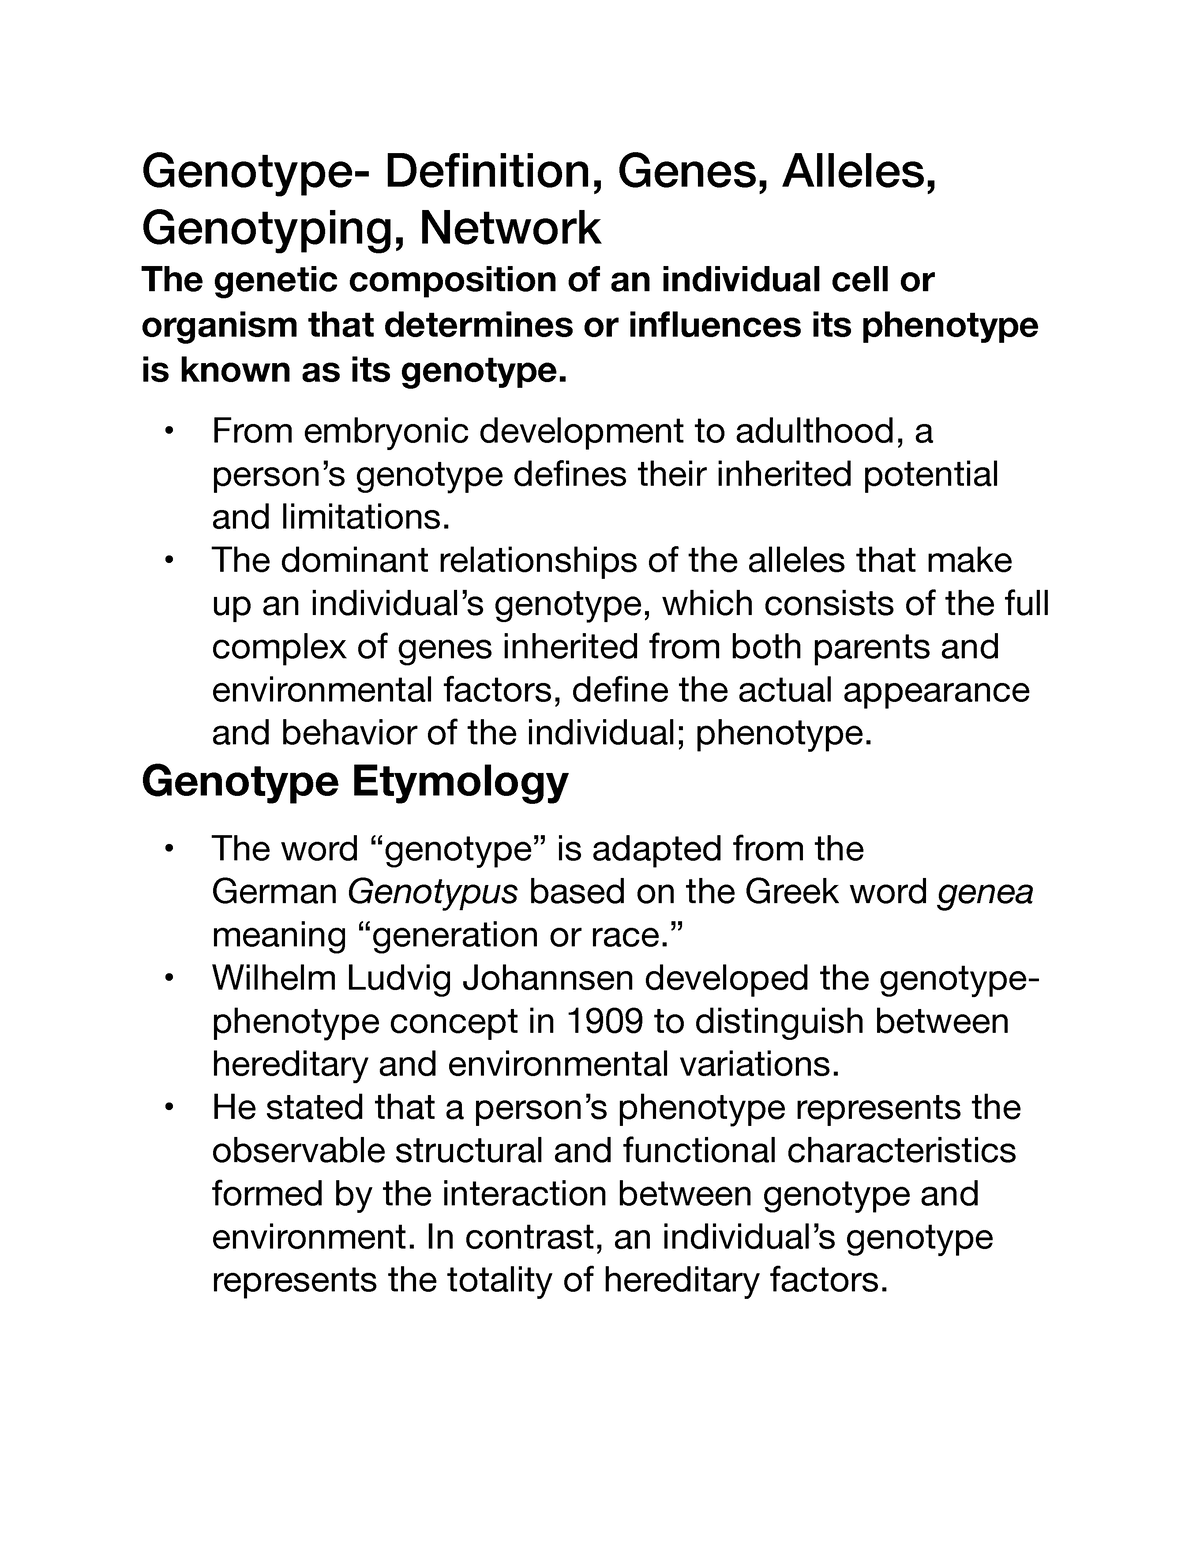 phenotype definition